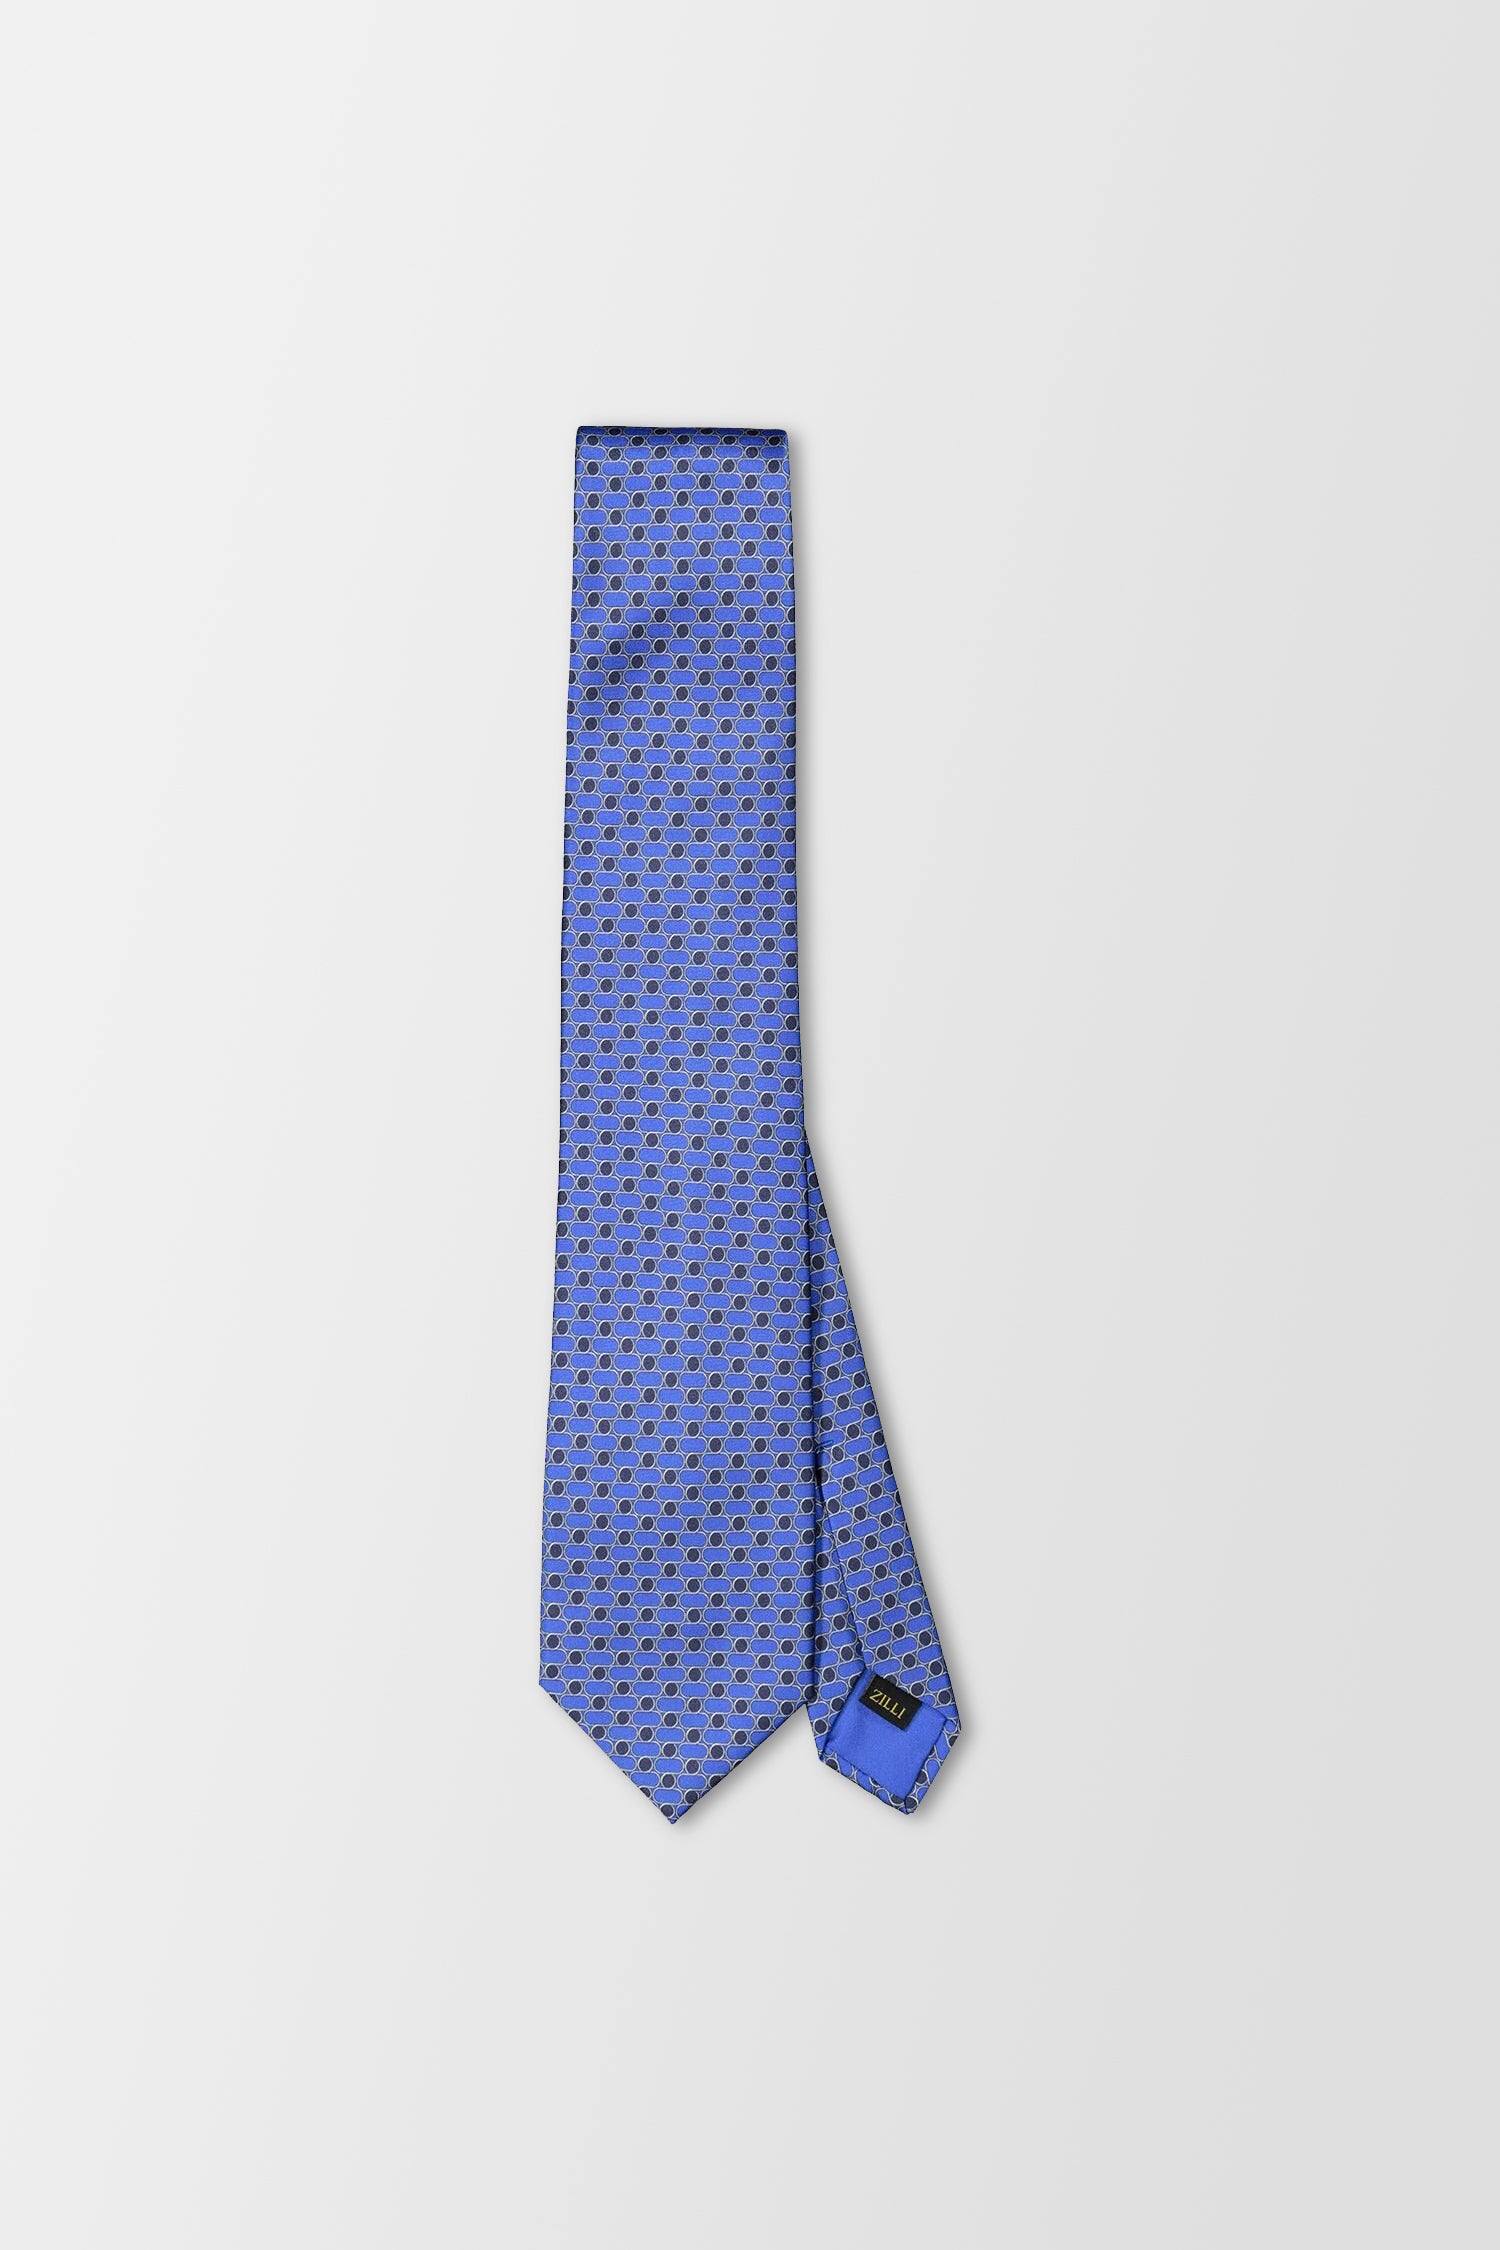 Zilli Blue Tie